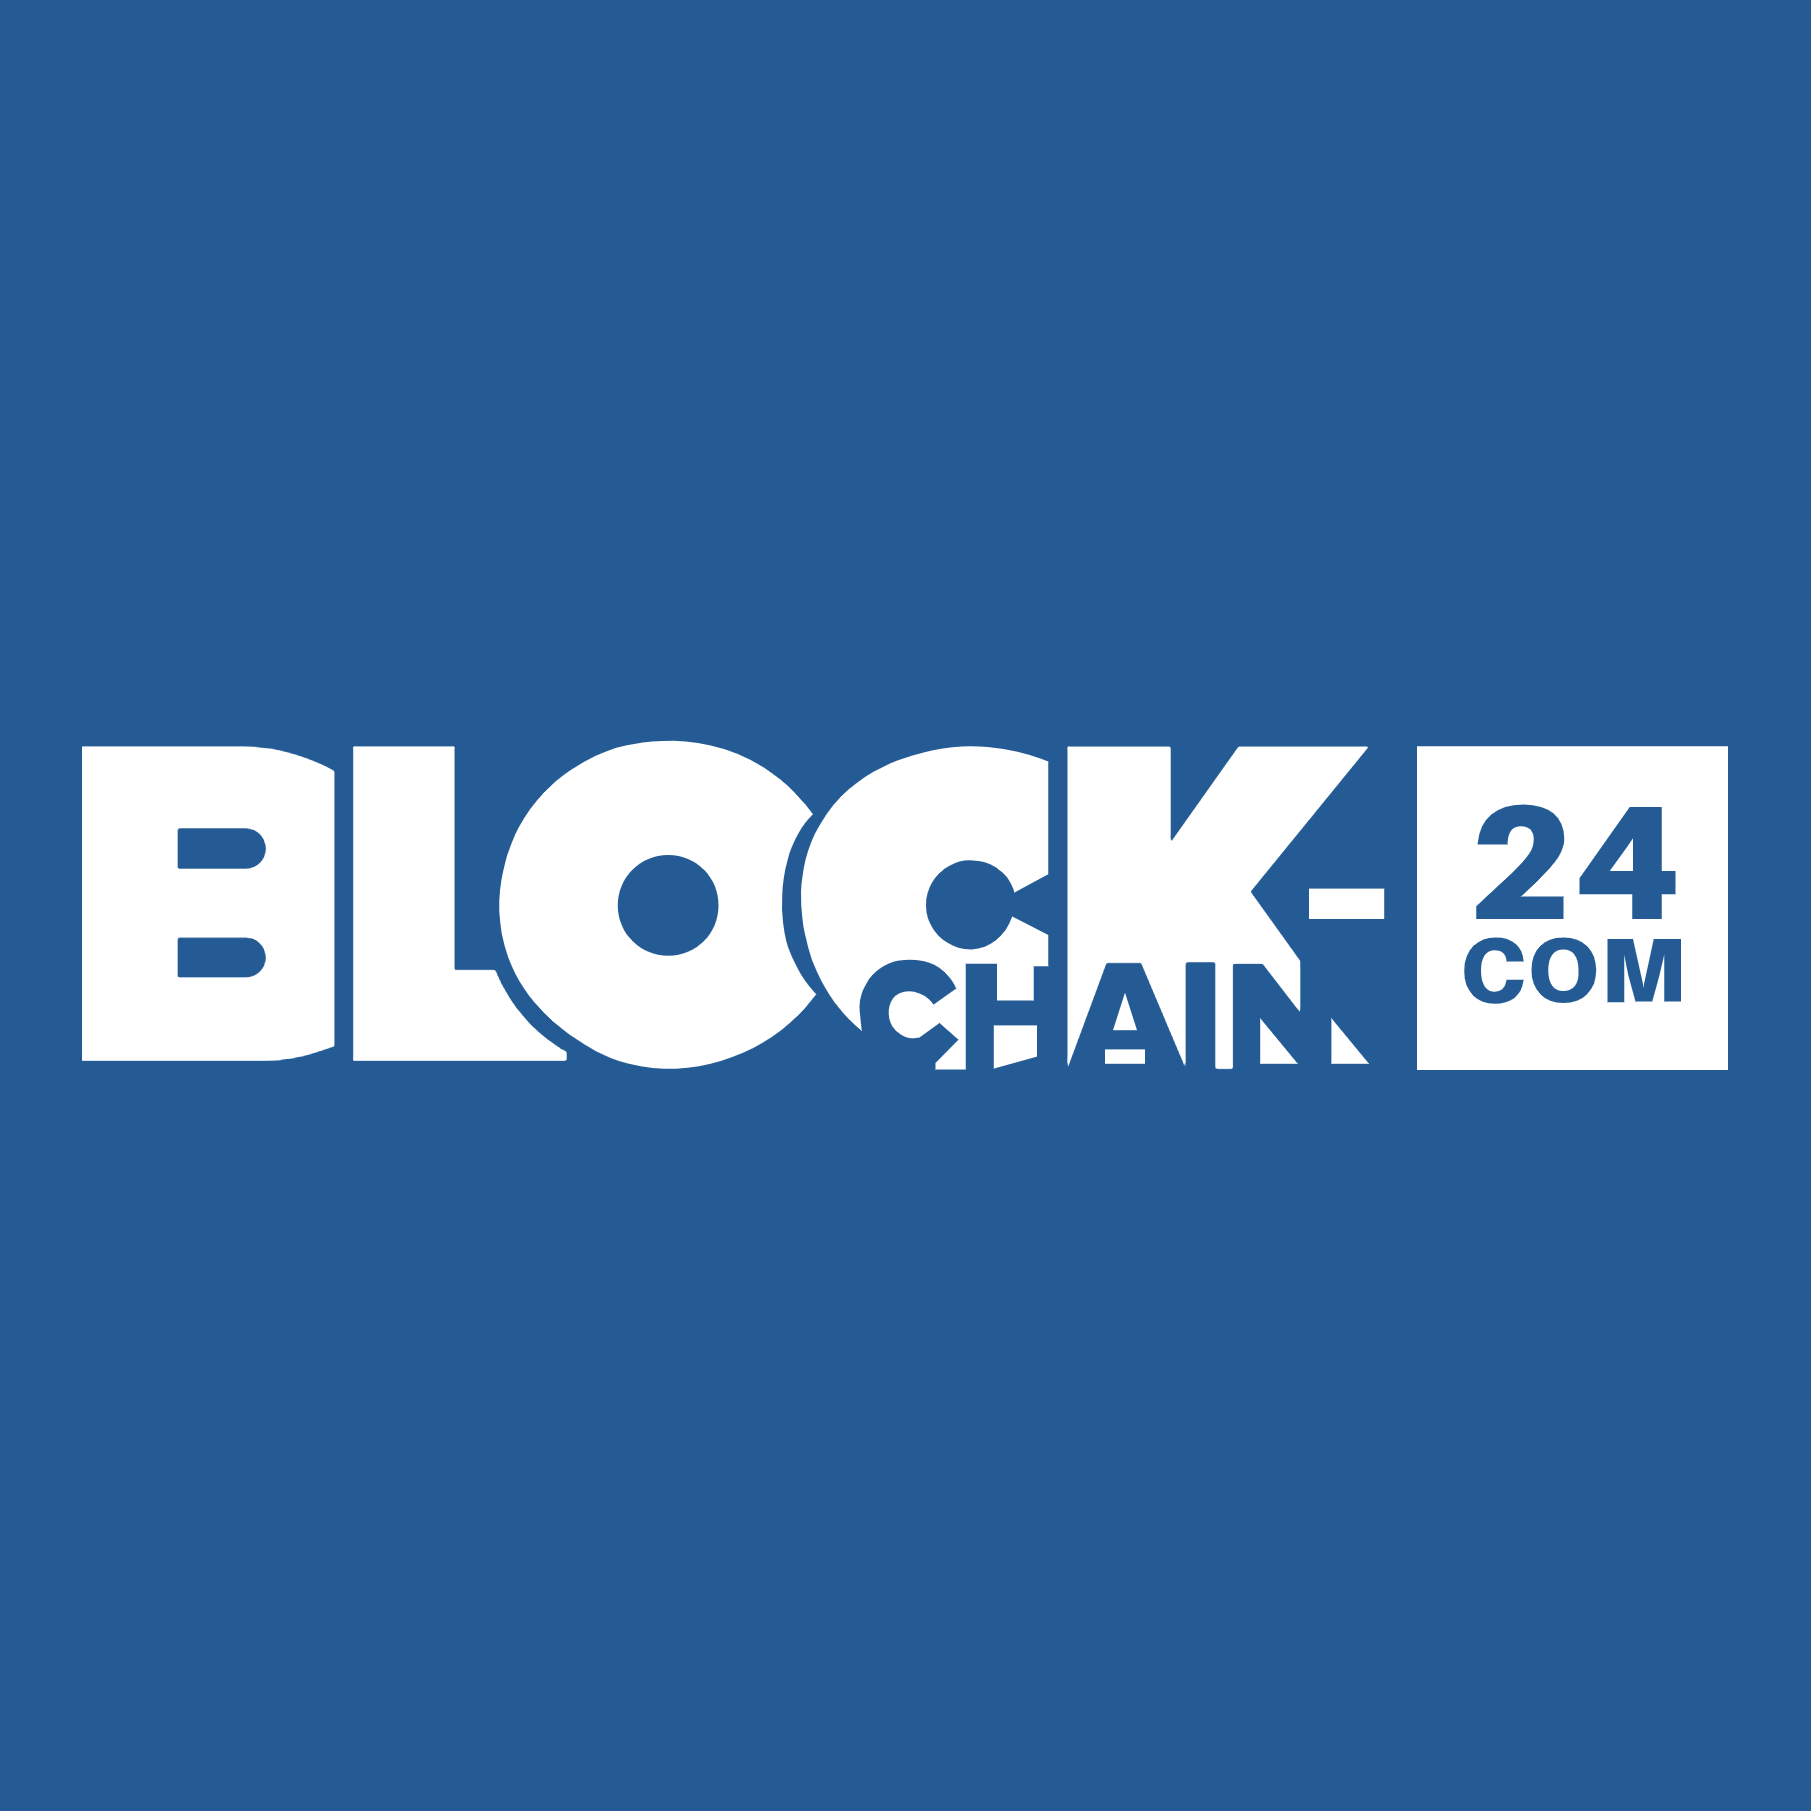 Www.Block-chain24 logo. Monex logo. Block news